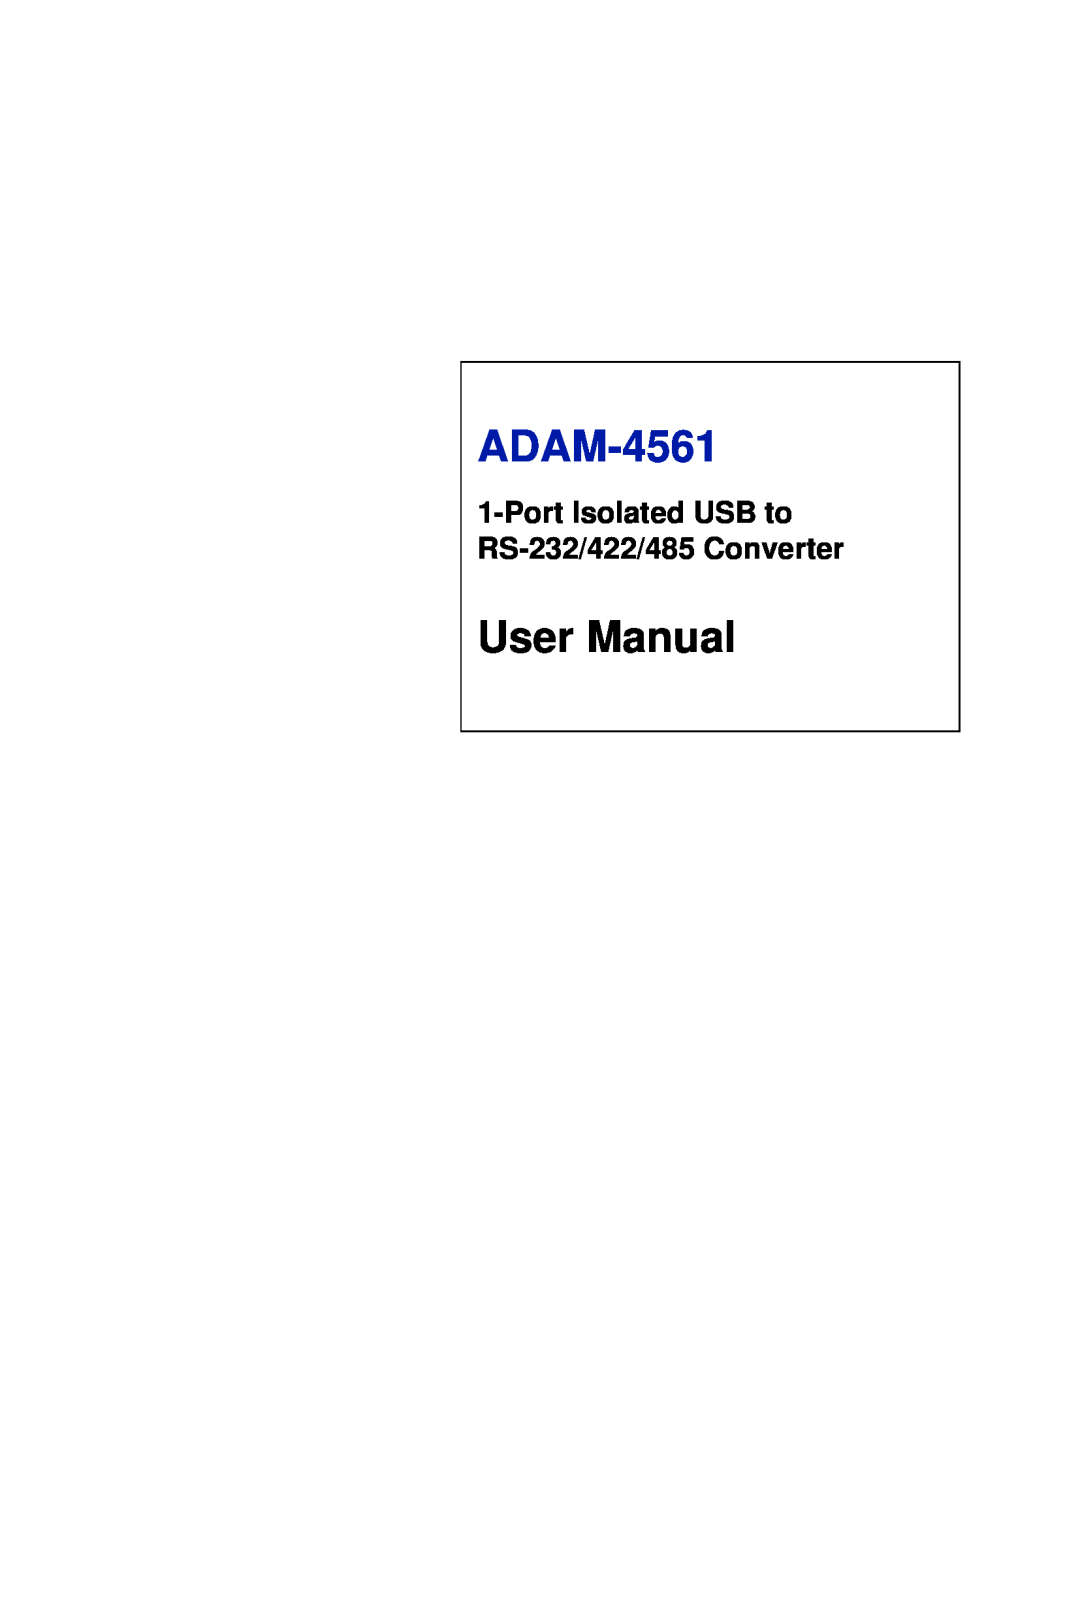 Advantech ADAM-4561 user manual User Manual, Port Isolated USB to RS-232/422/485 Converter 